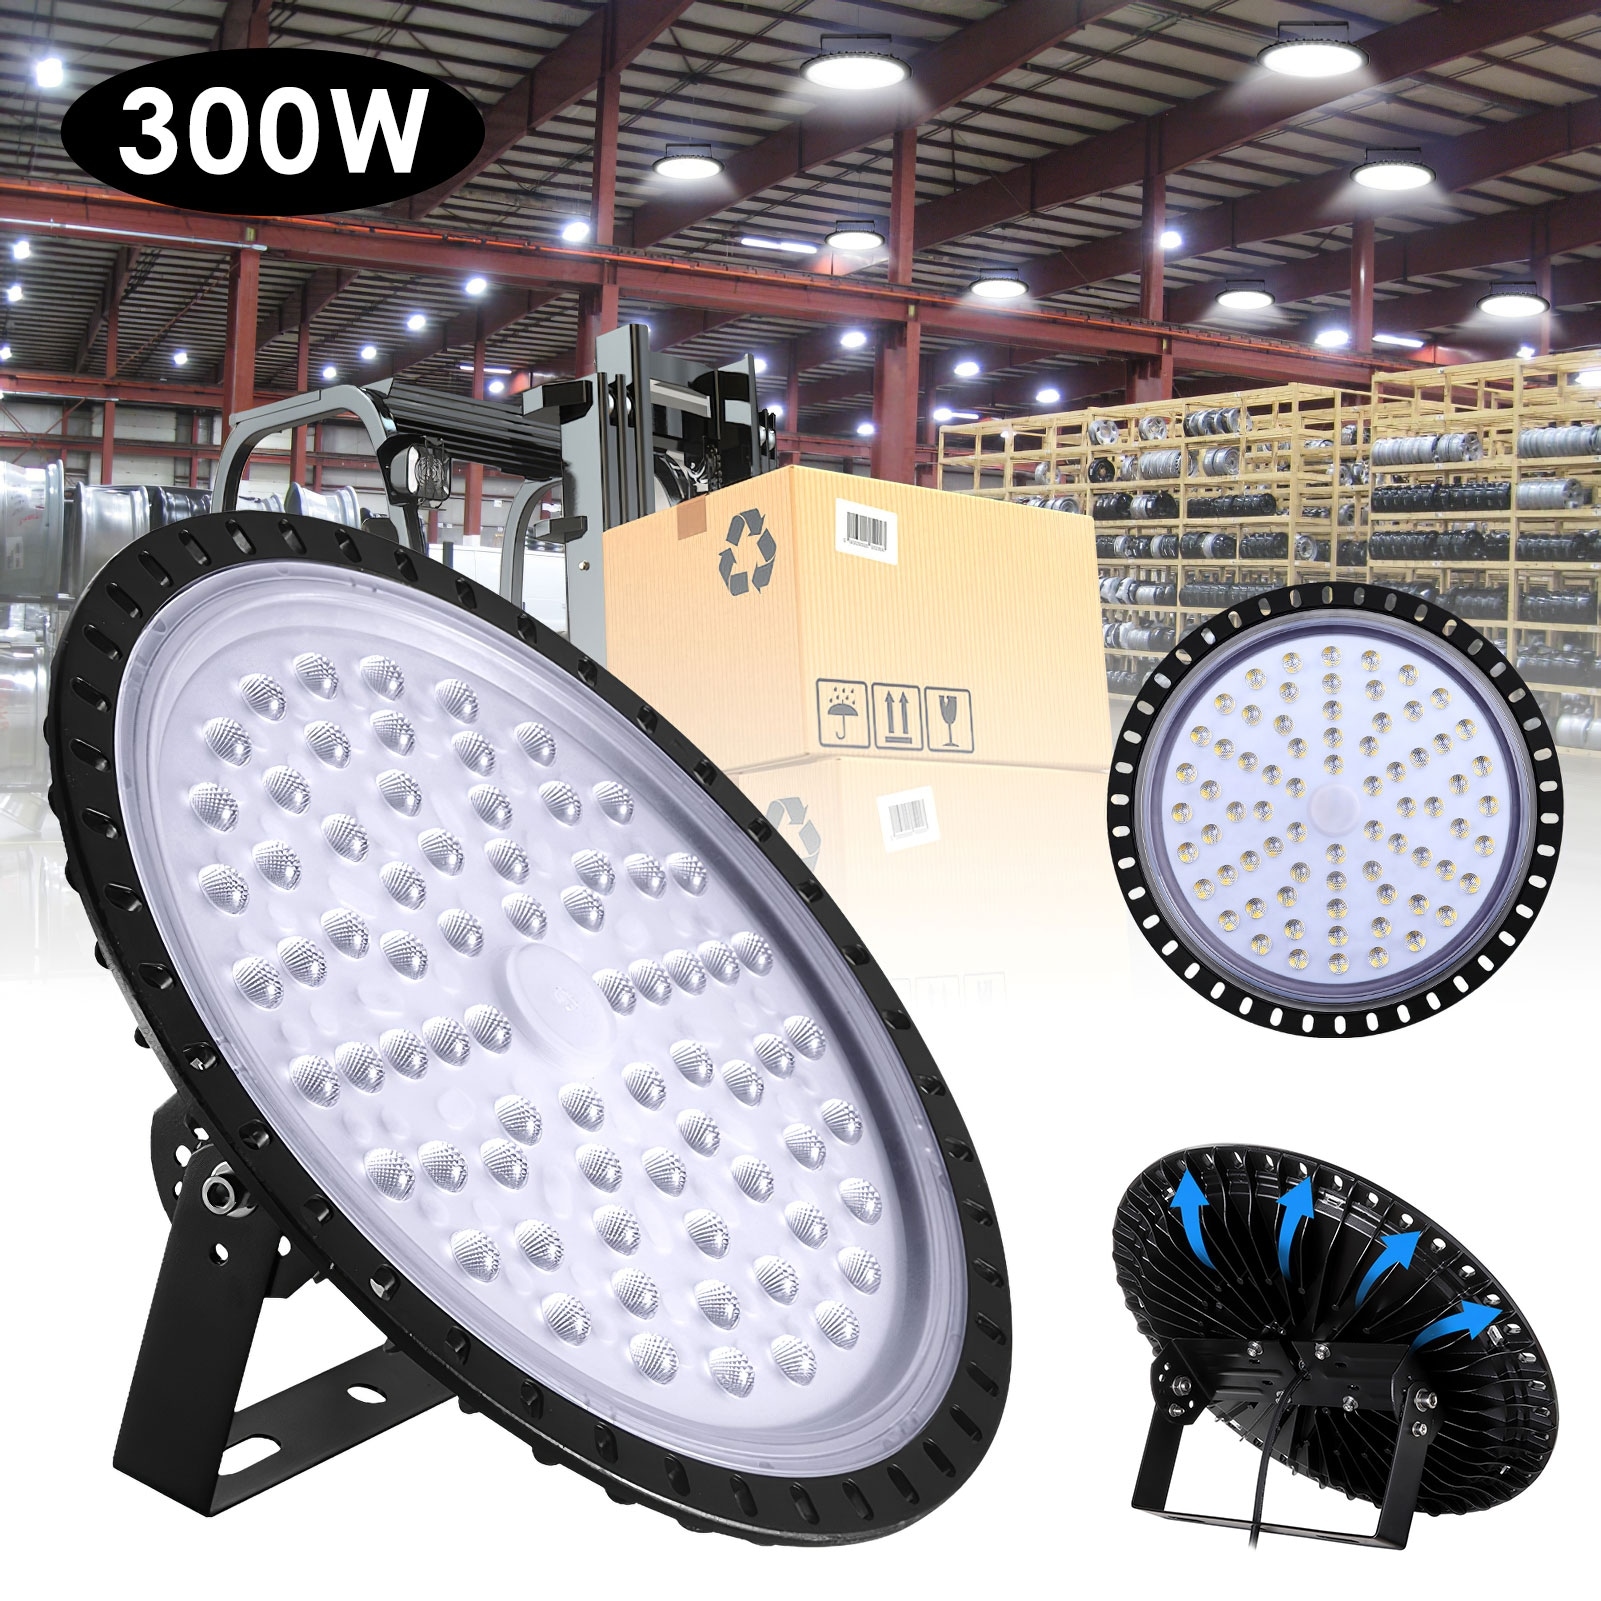 500W 300W 200W 100W UFO LED High Bay Light Industrial Warehouse Canopy Fixture 